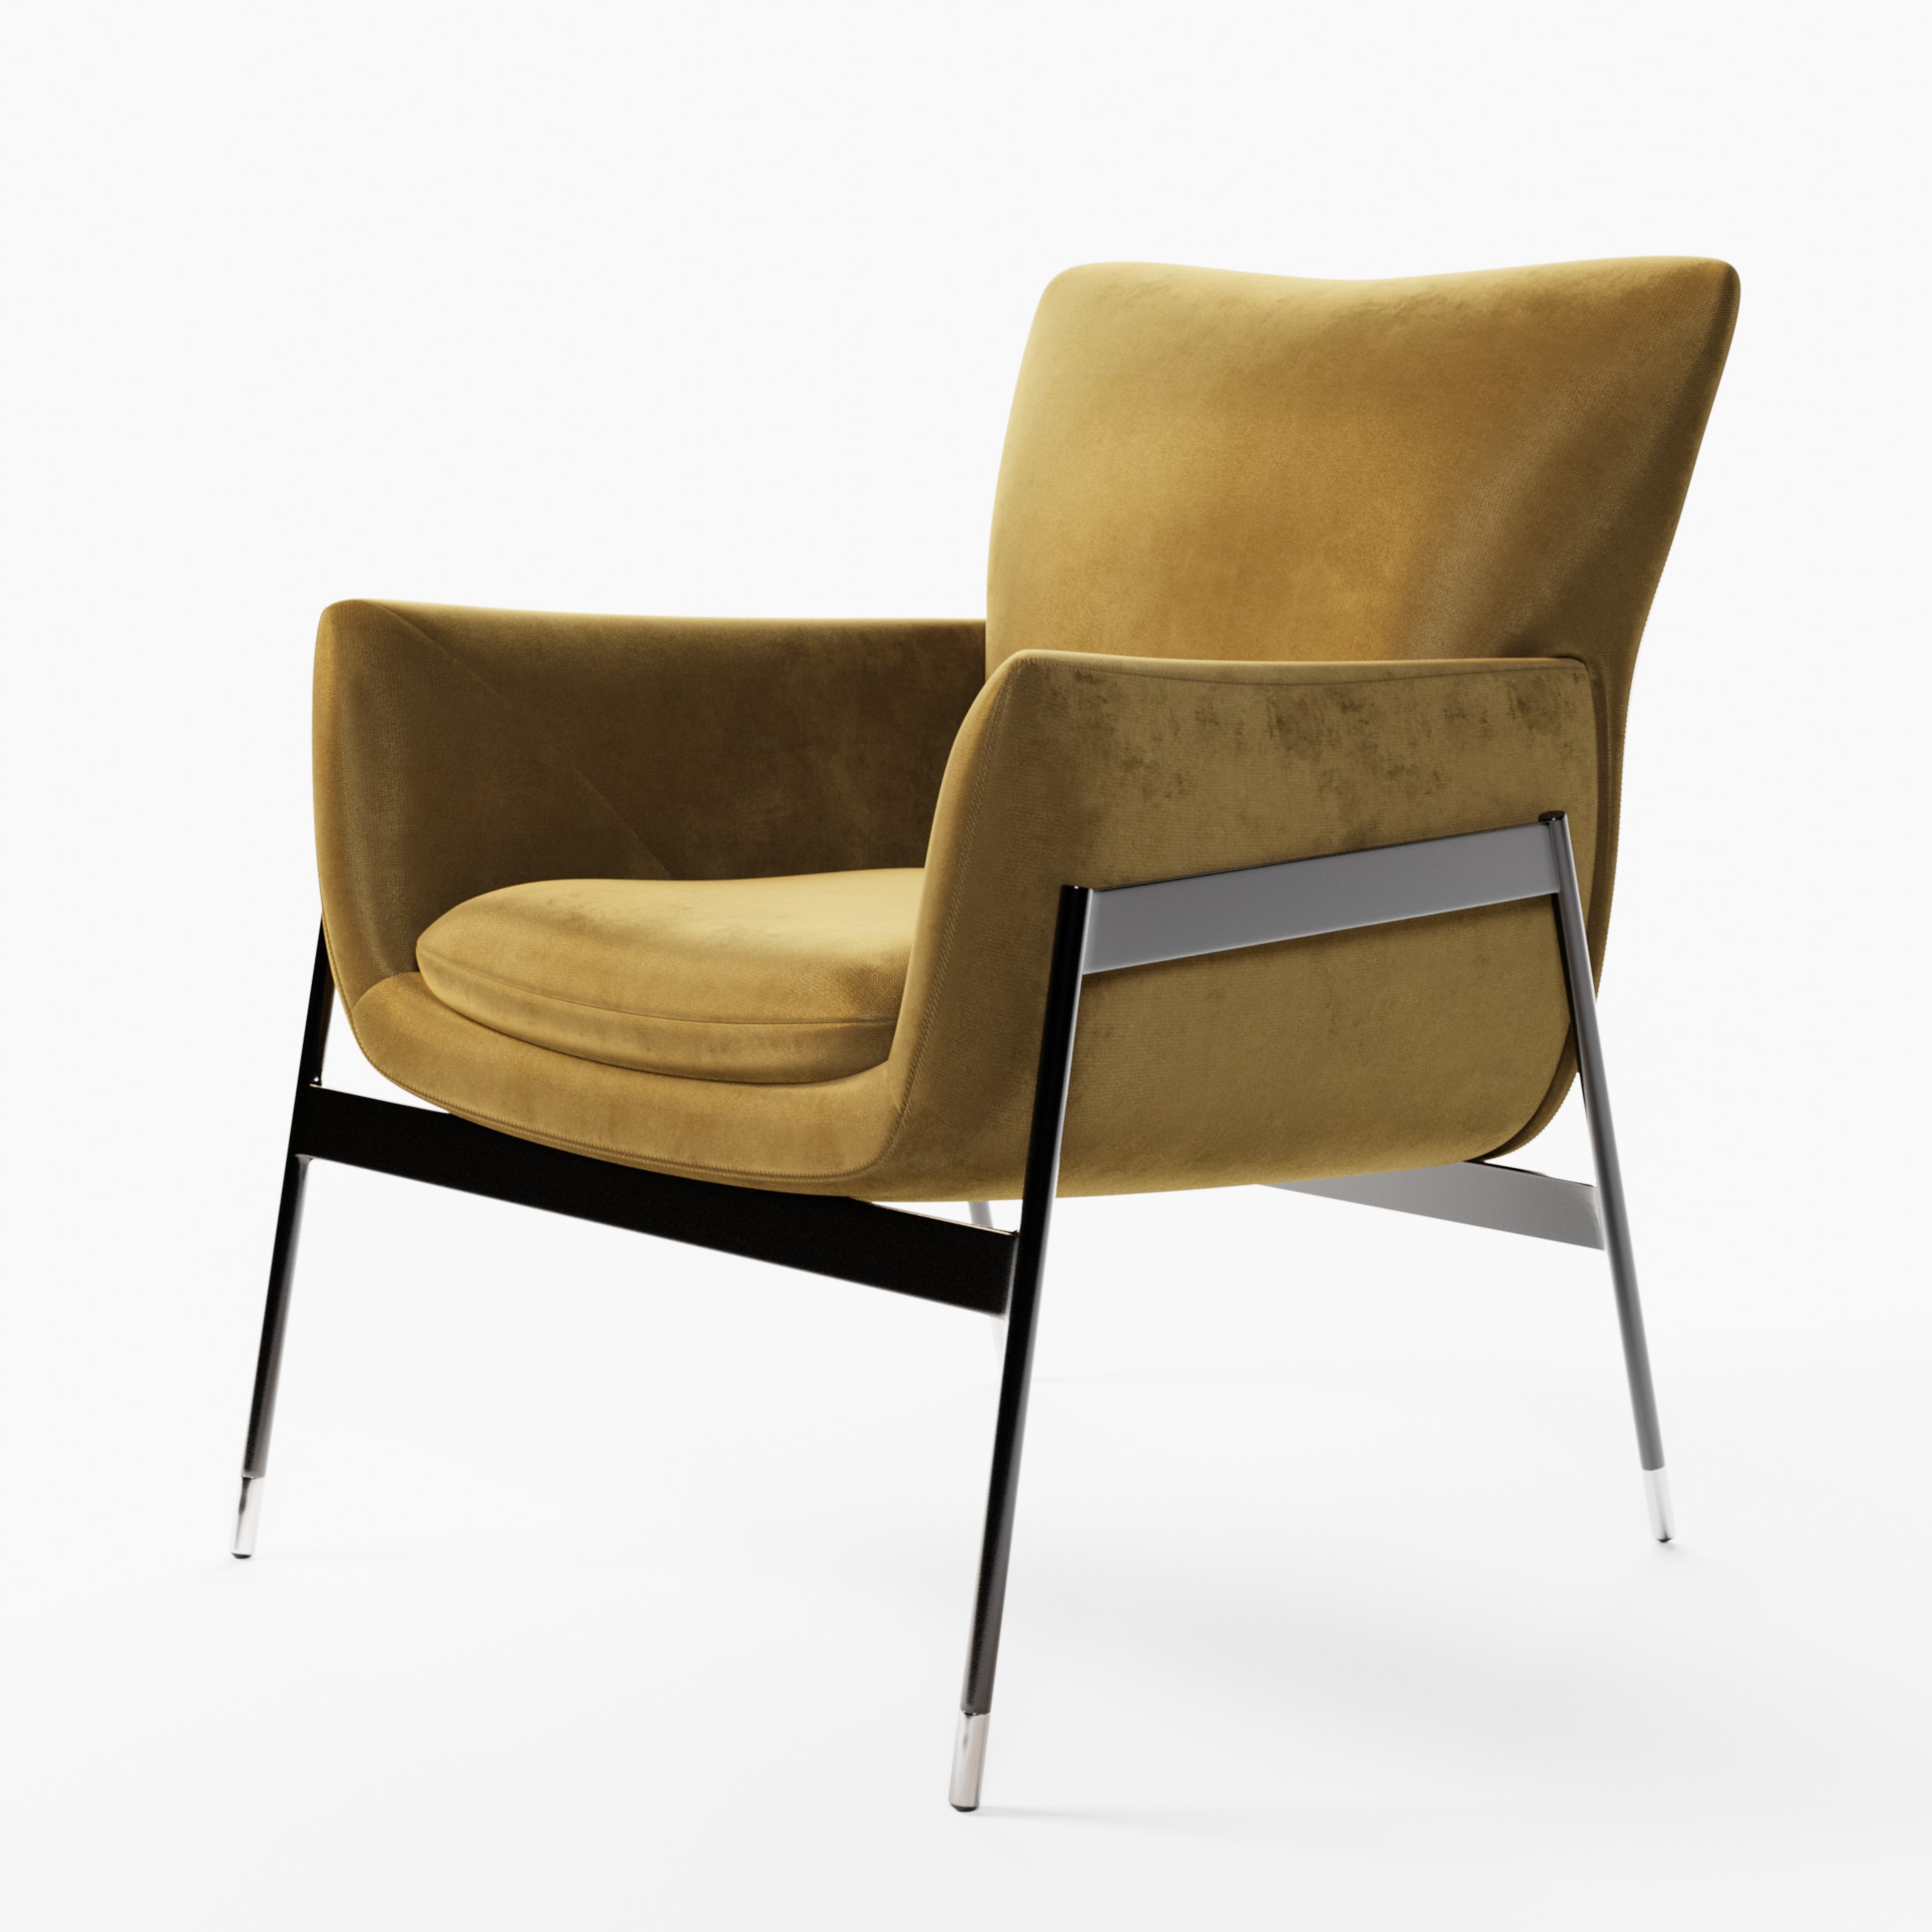 zatarski-3d-model-of-chair-1